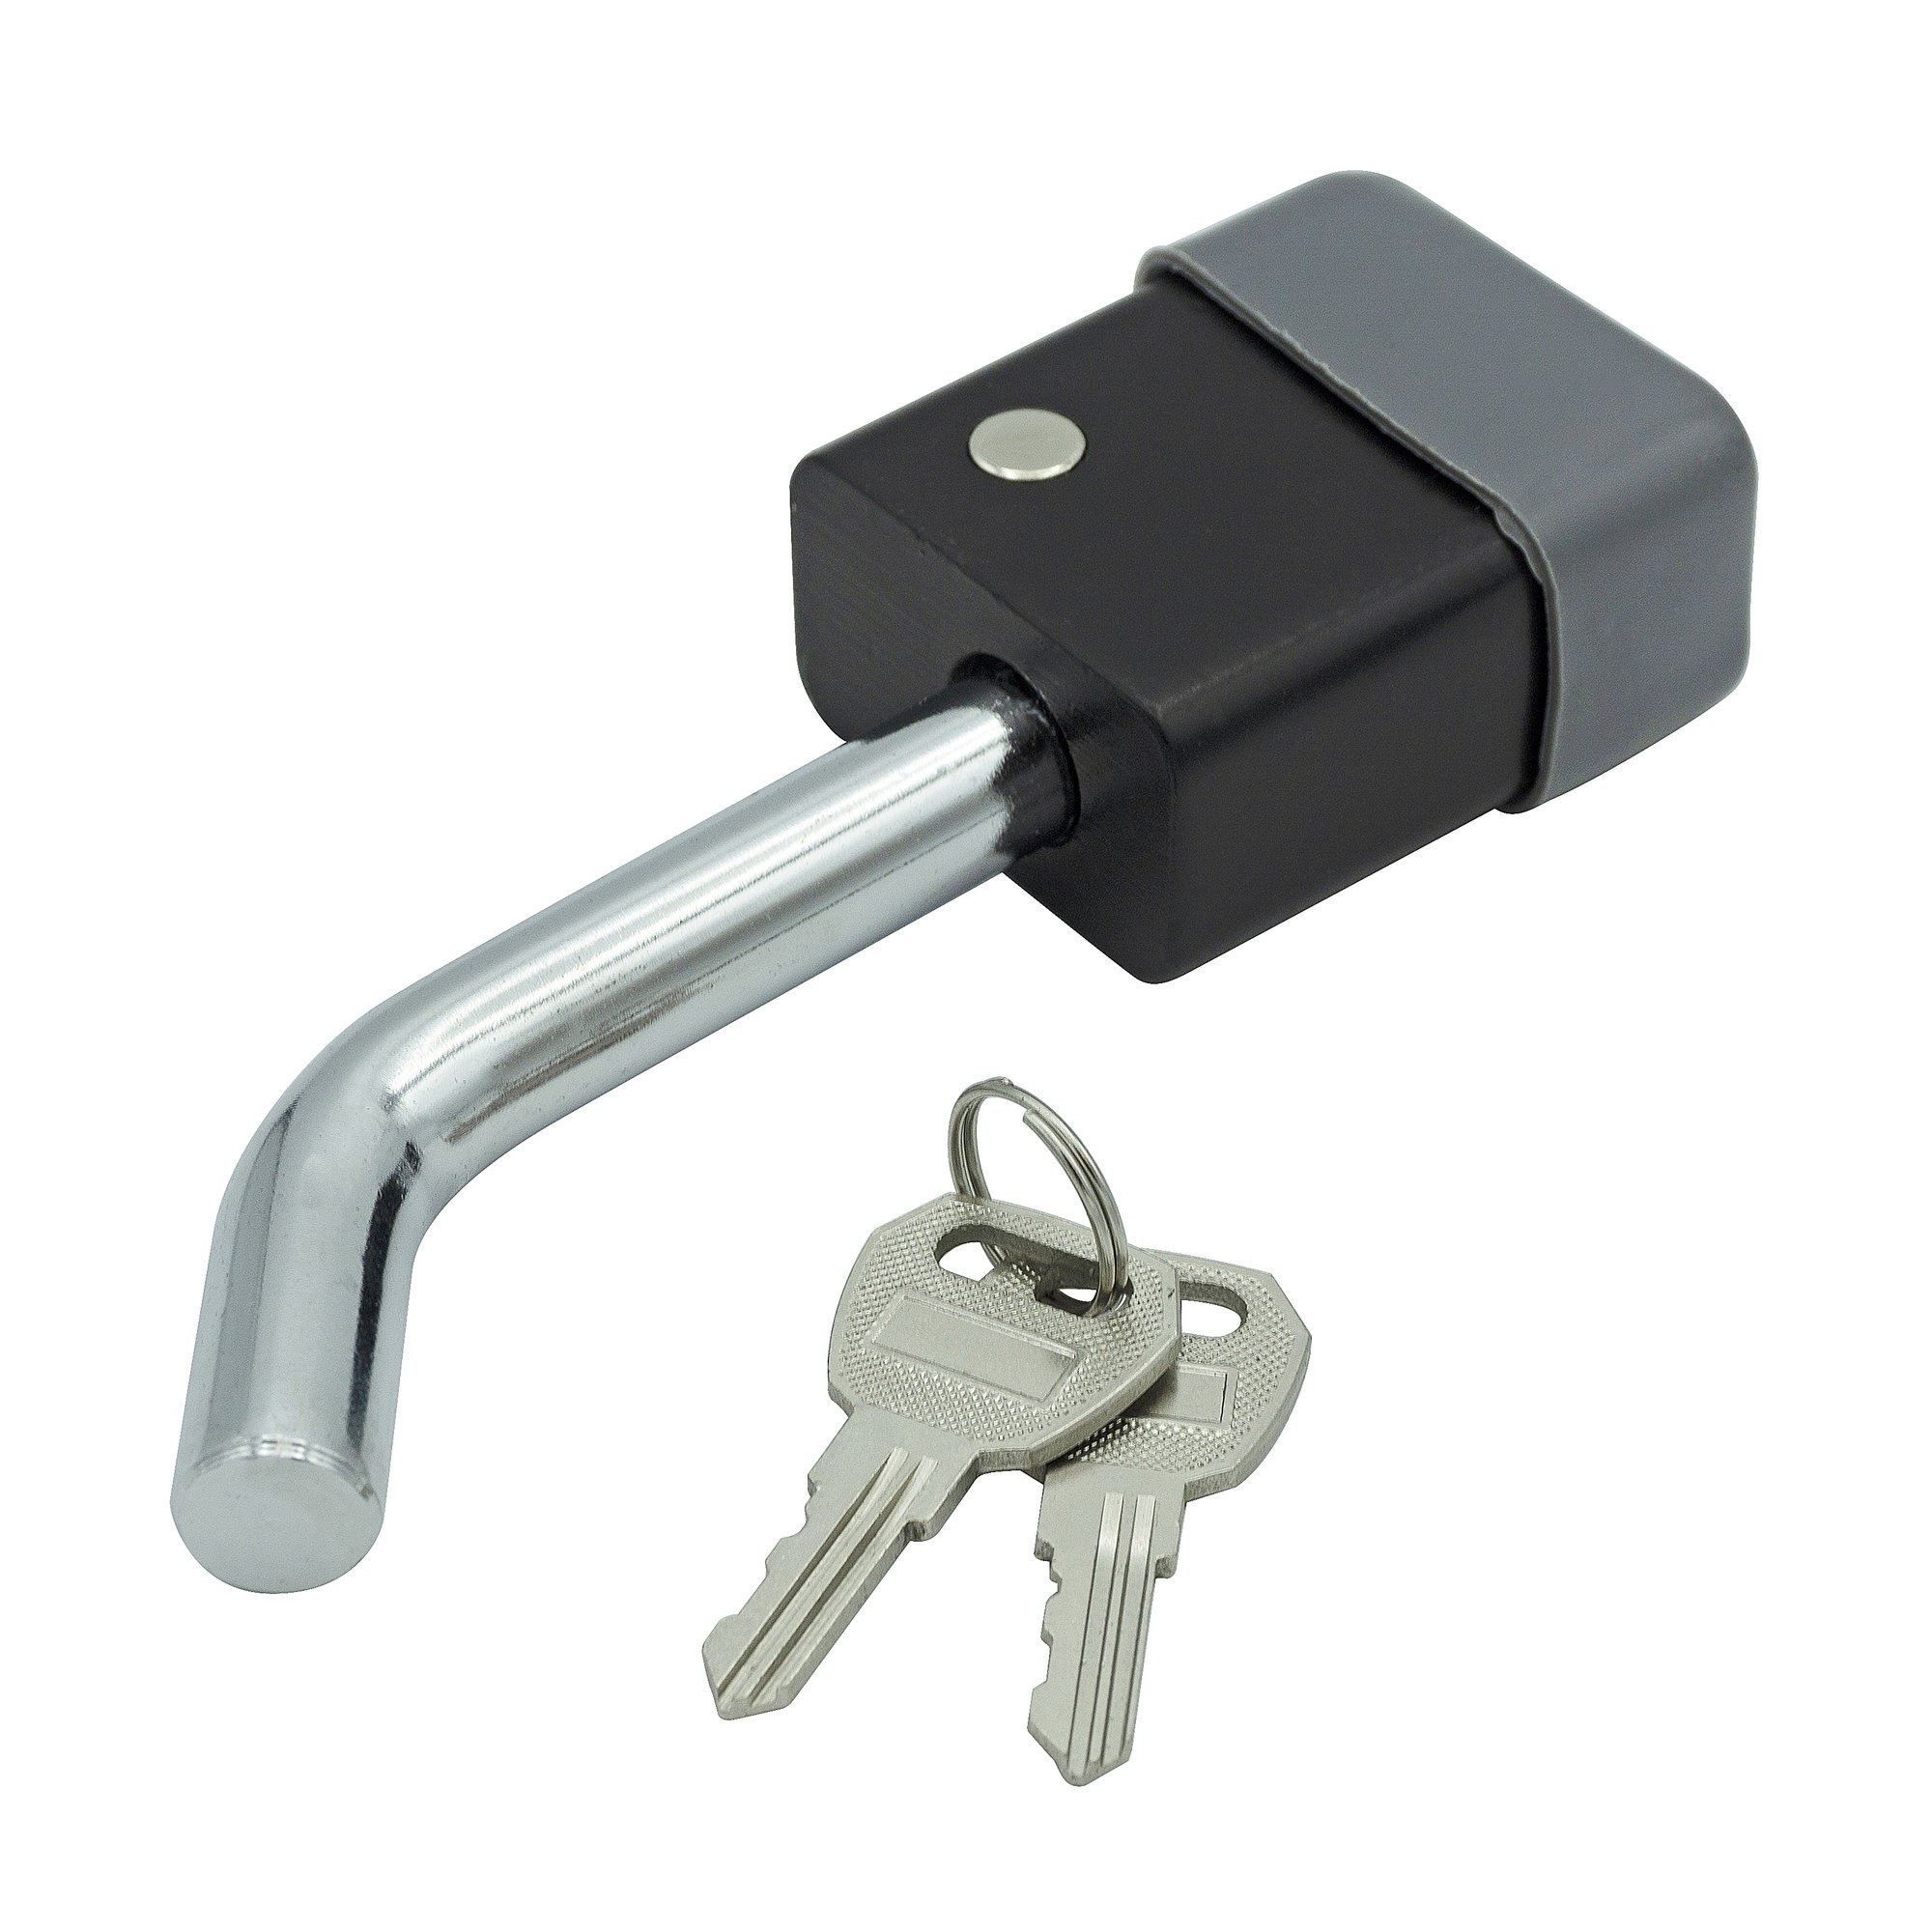 Brok 32989 Draw Bar 1/2" Bent Pin Receiver Lock for 1.25" Class I & II